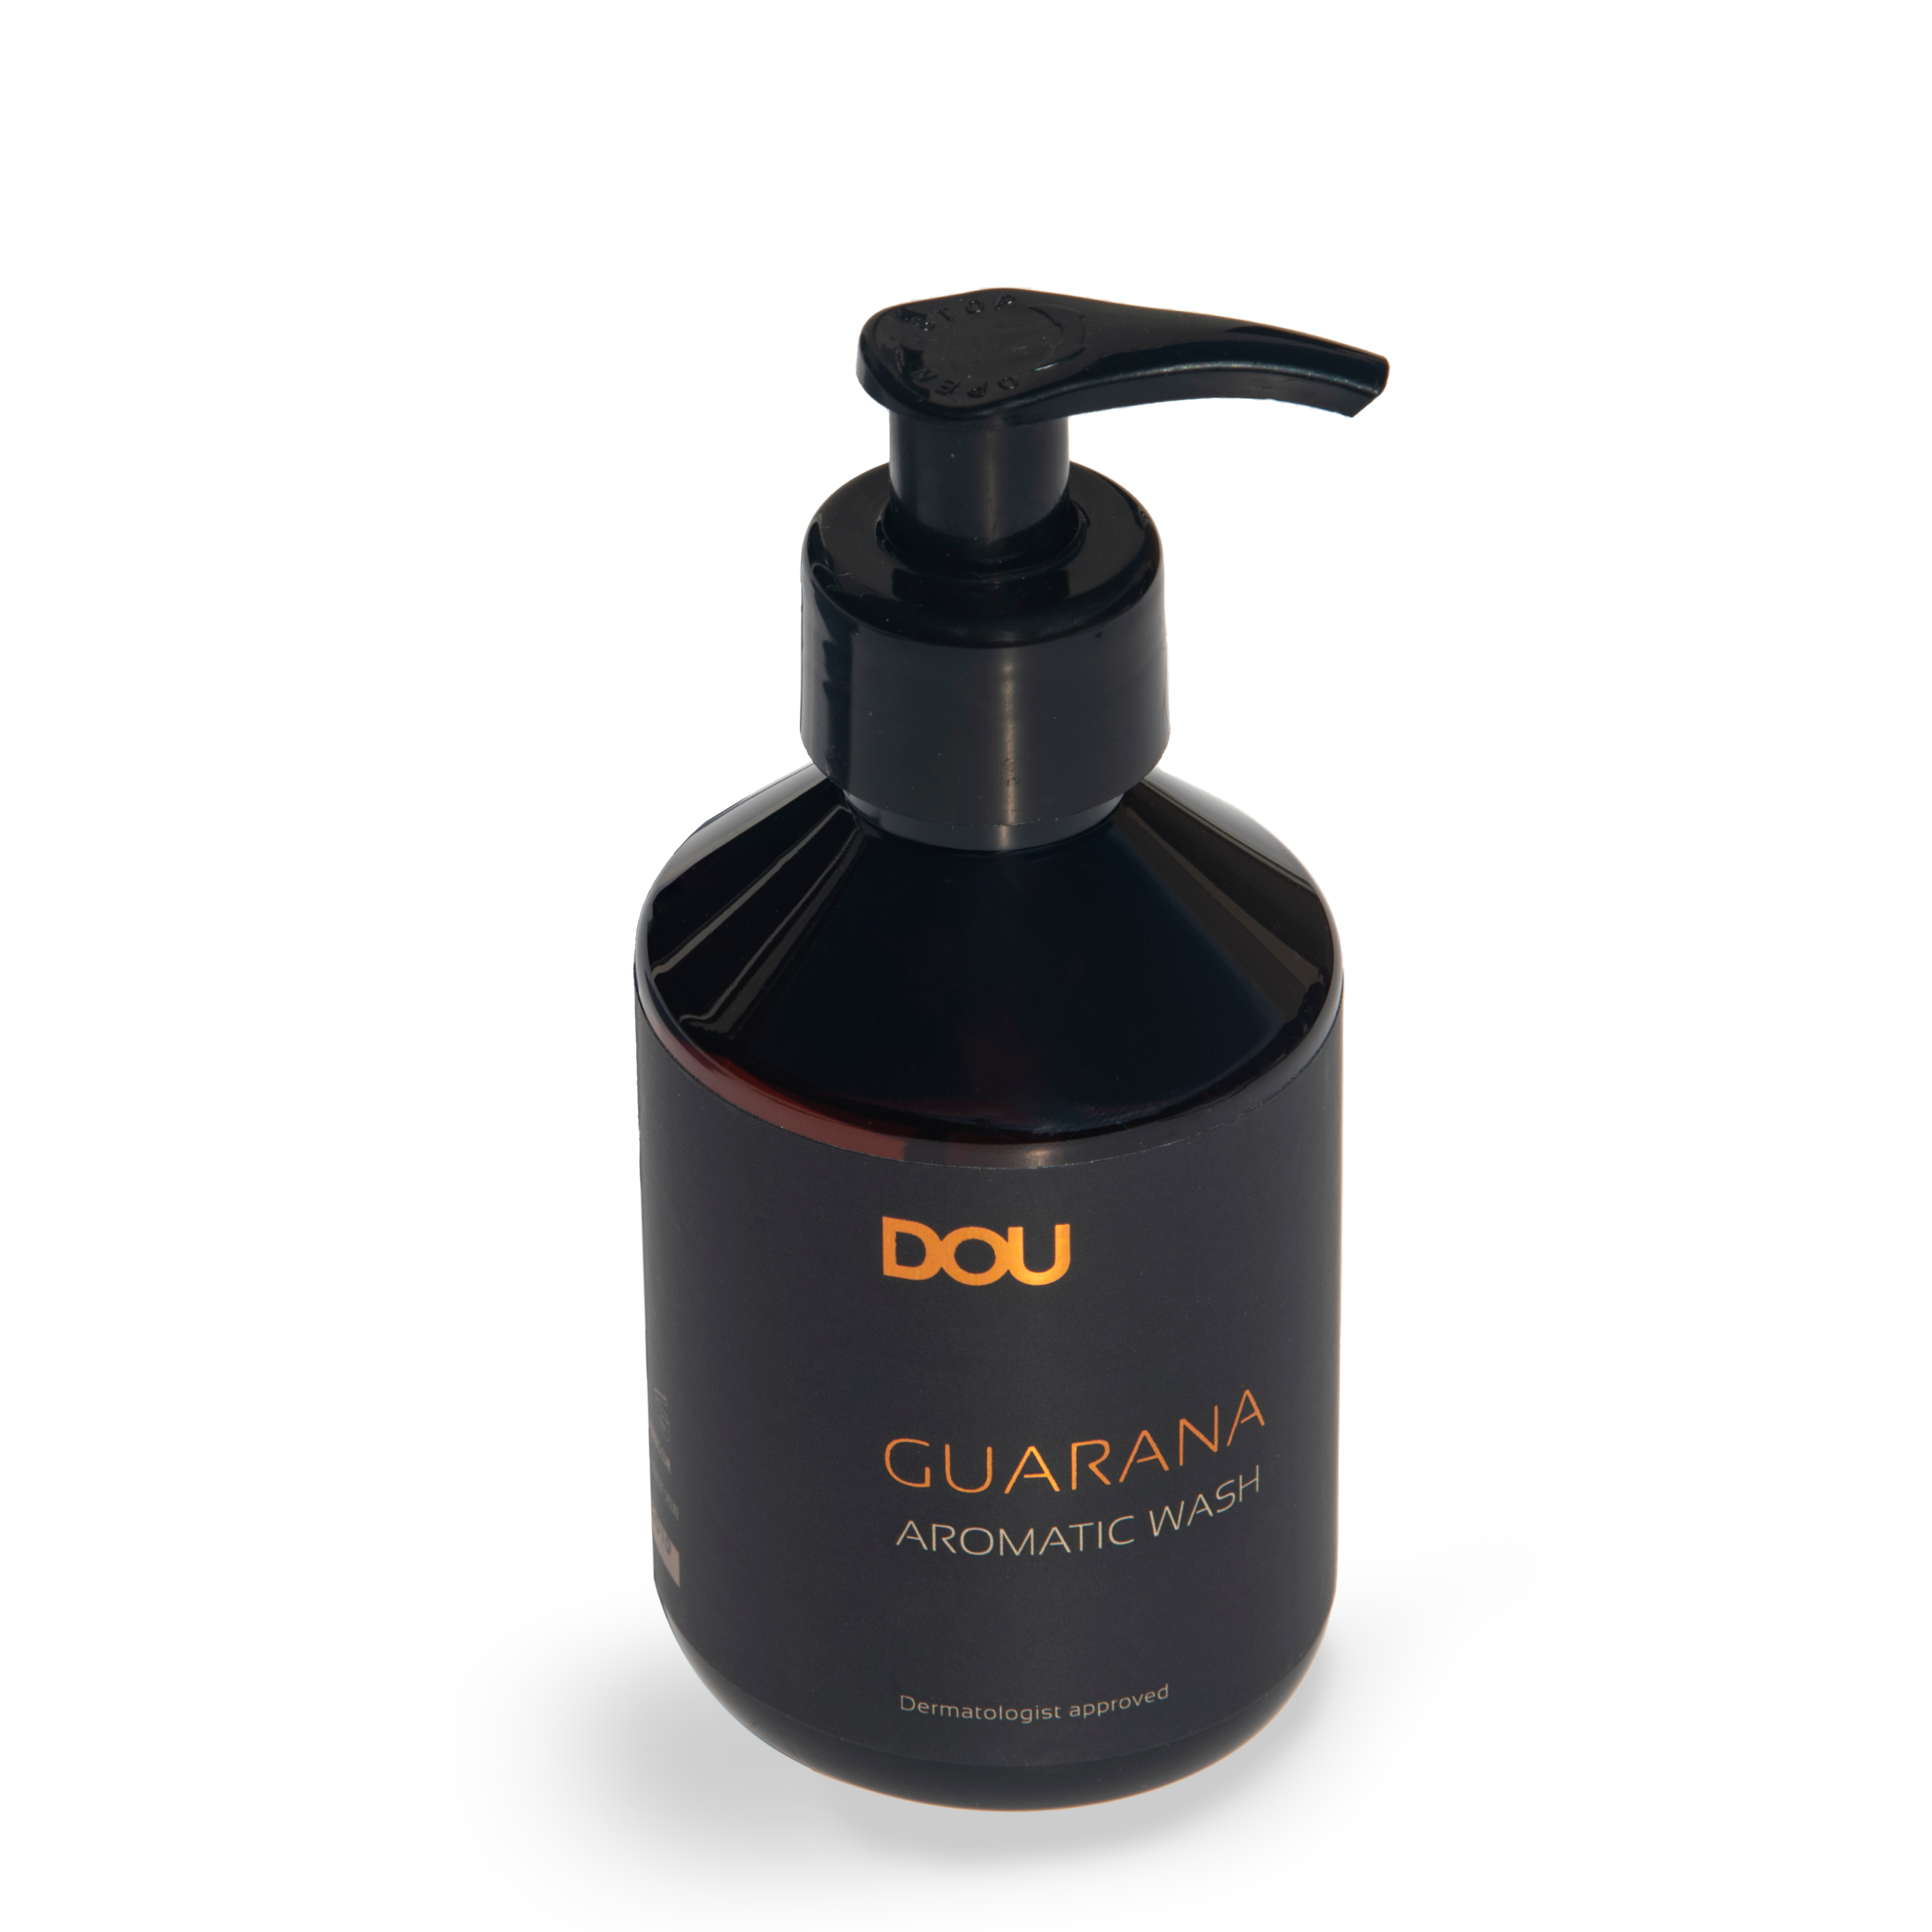 DOU Luxury Aromatic Wash Guarana